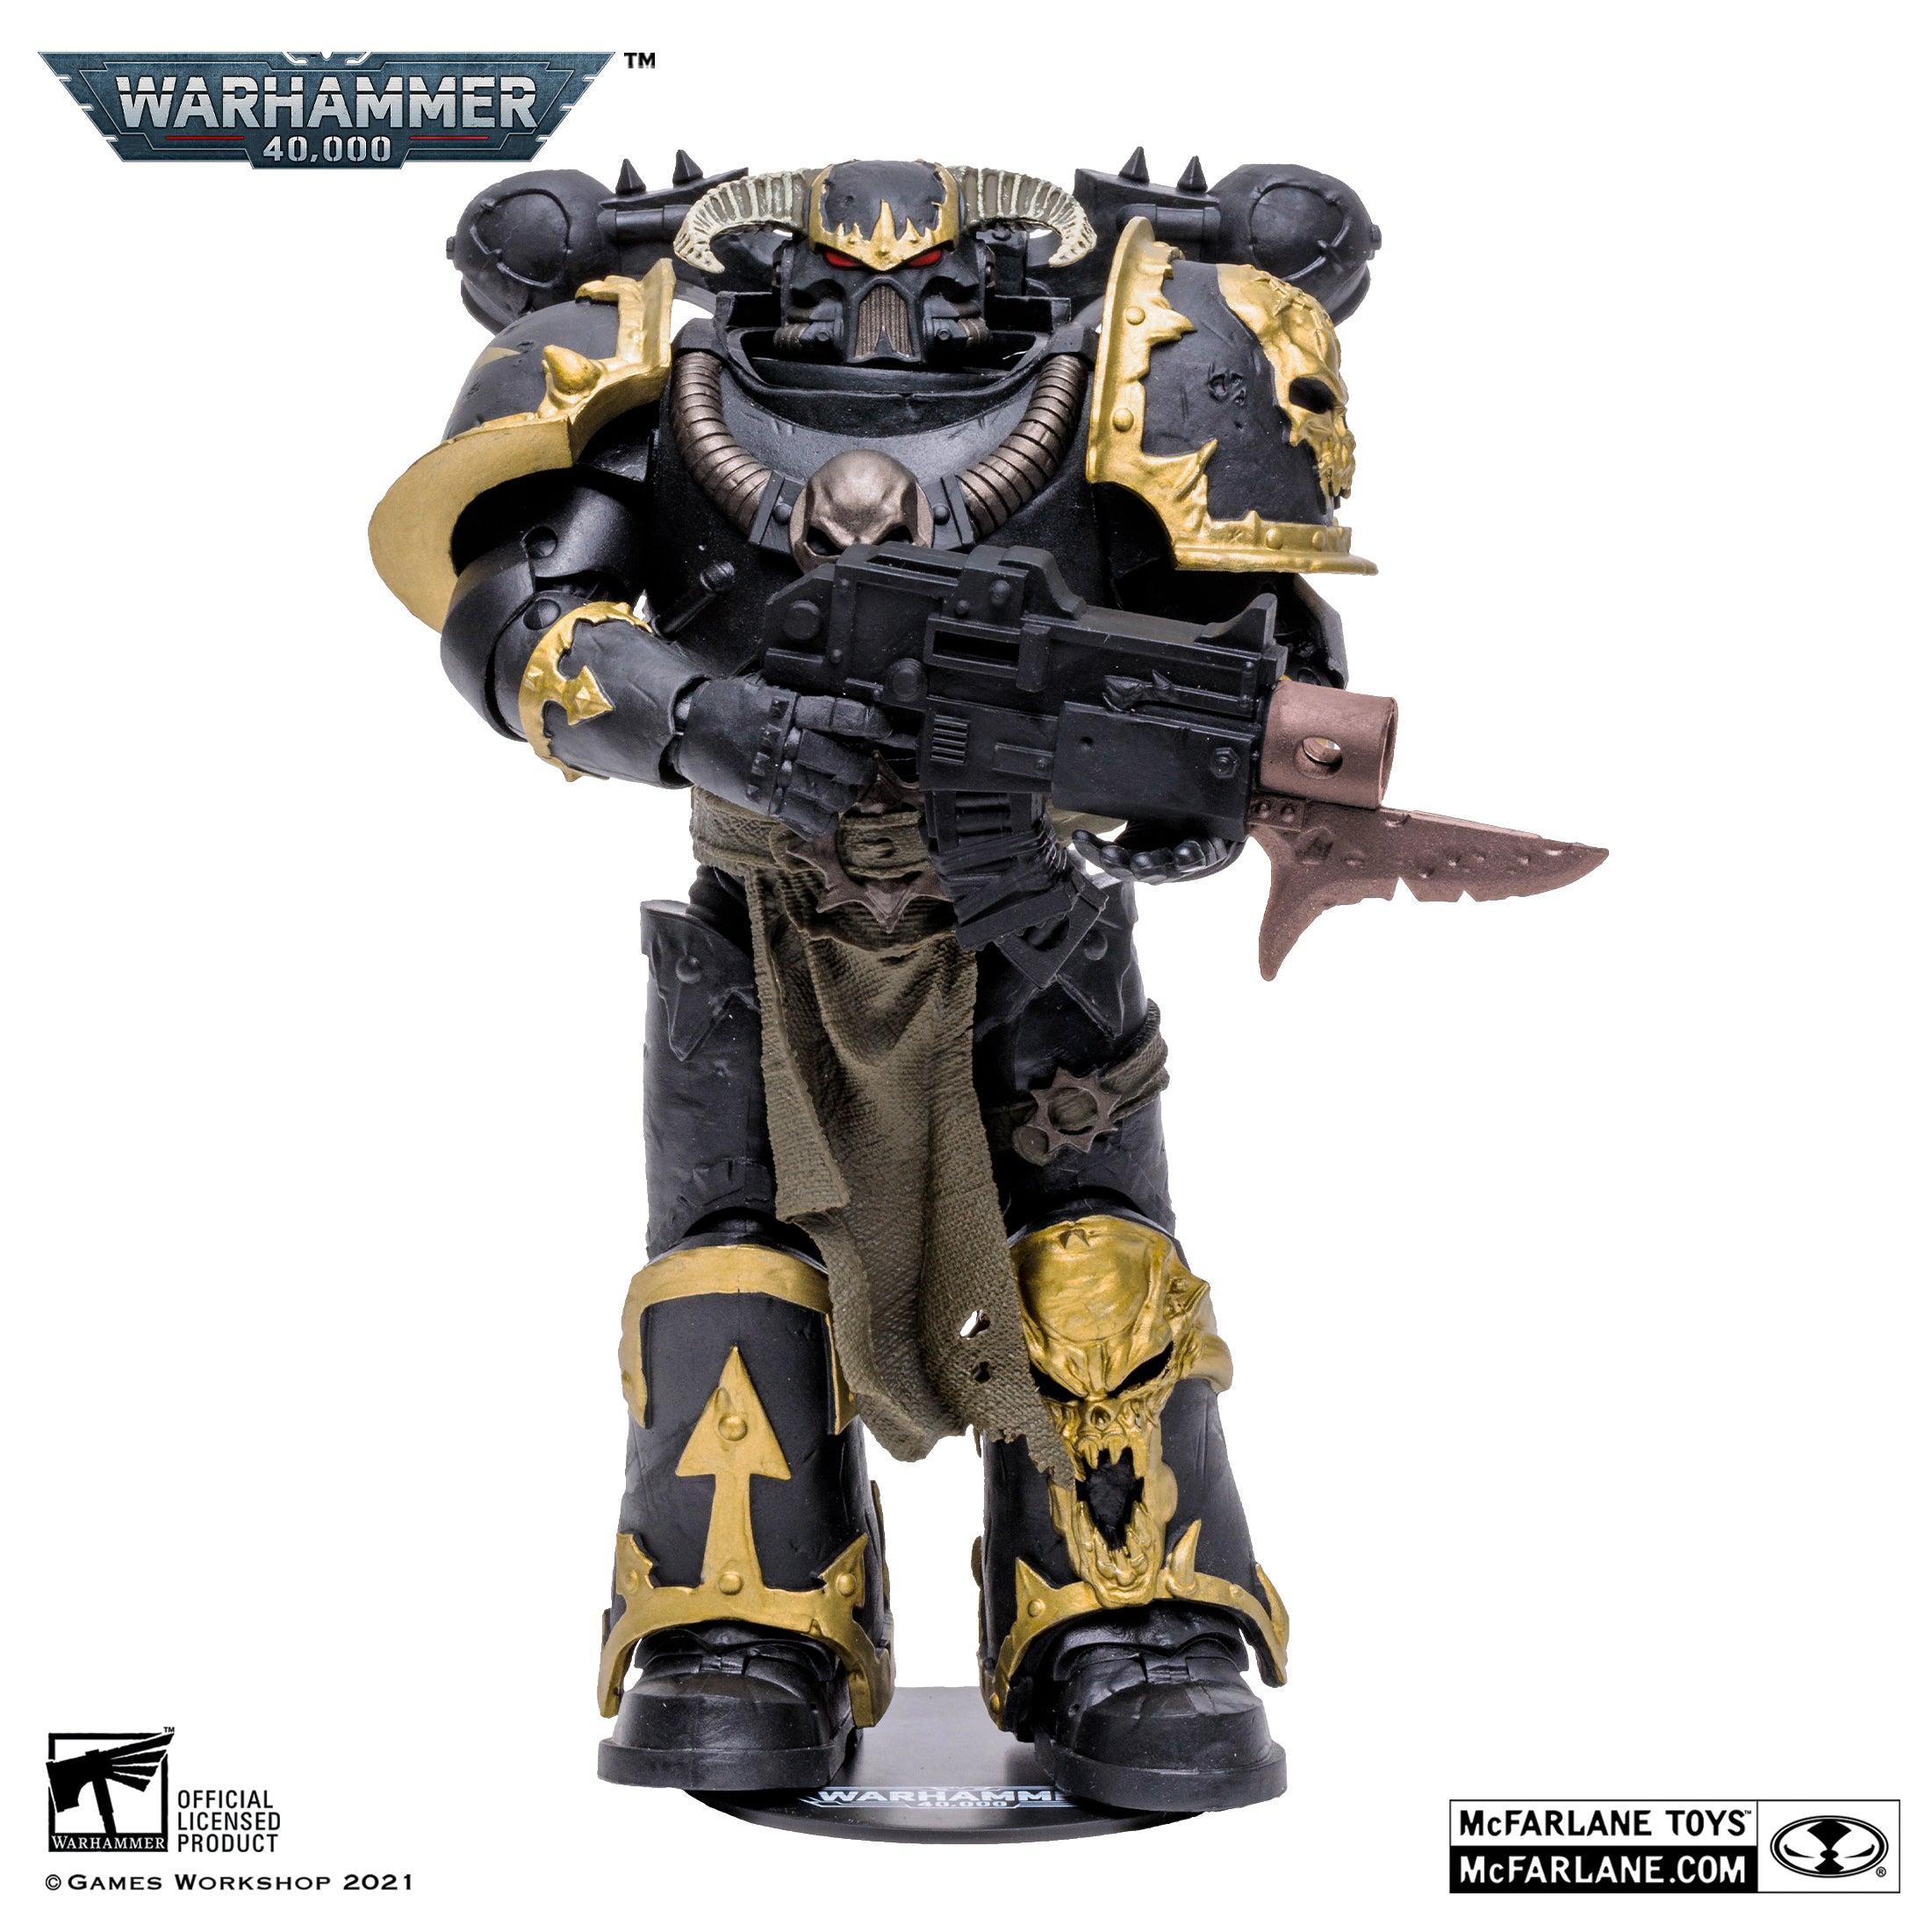 Warhammer 40,000 Chaos Space Marine